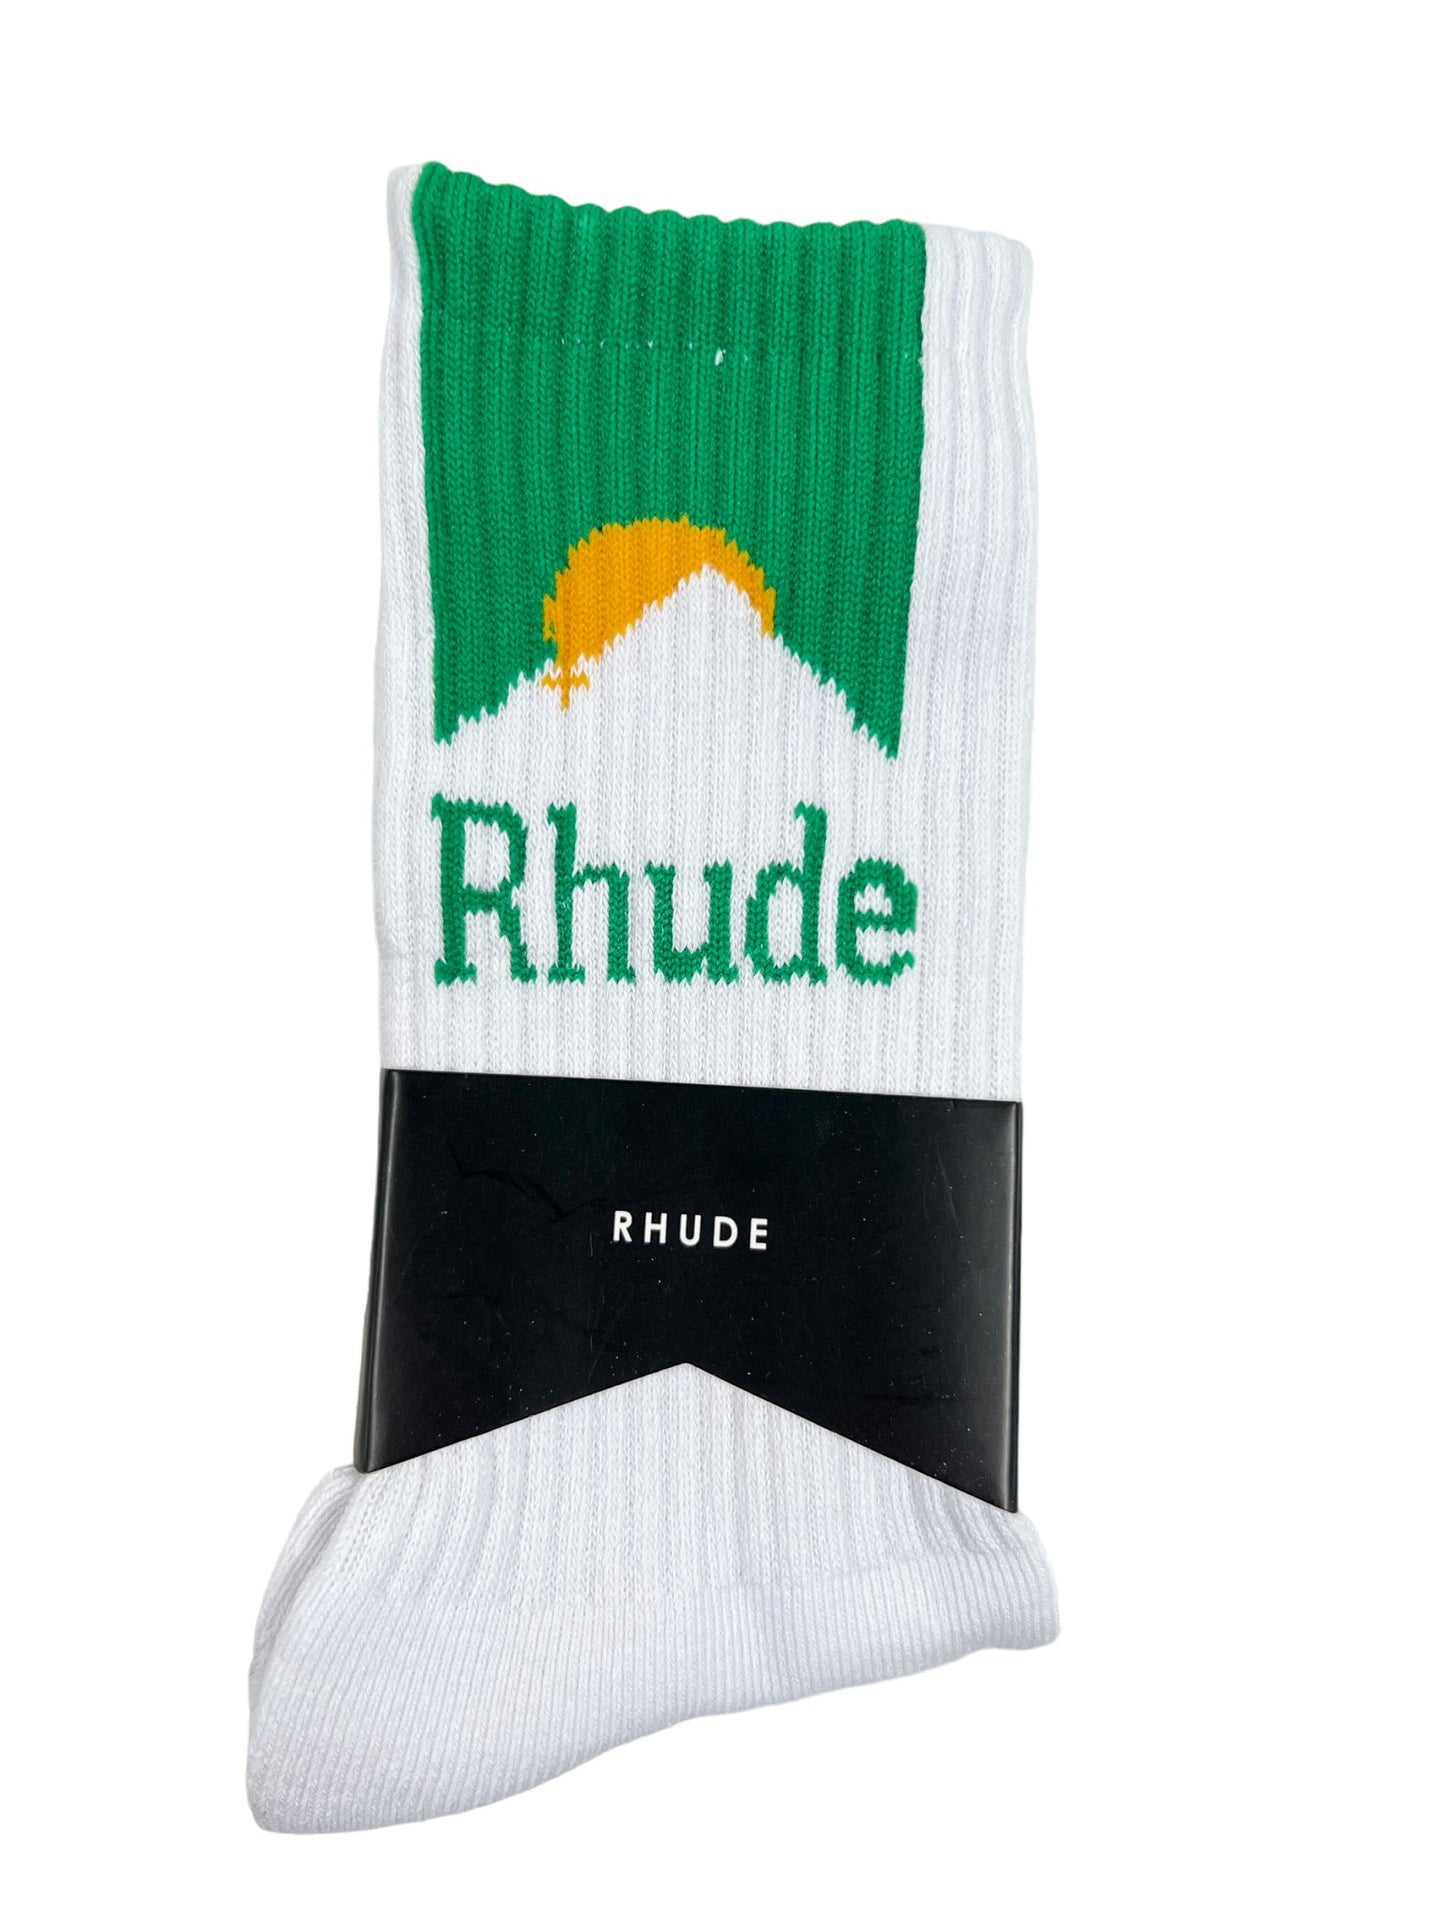 Probus RHUDE MOONLIGHT SOCK WHITE/GREEN/YELLOW RHUDE MOONLIGHT SOCK WHITE/GREEN/YELLOW O/S